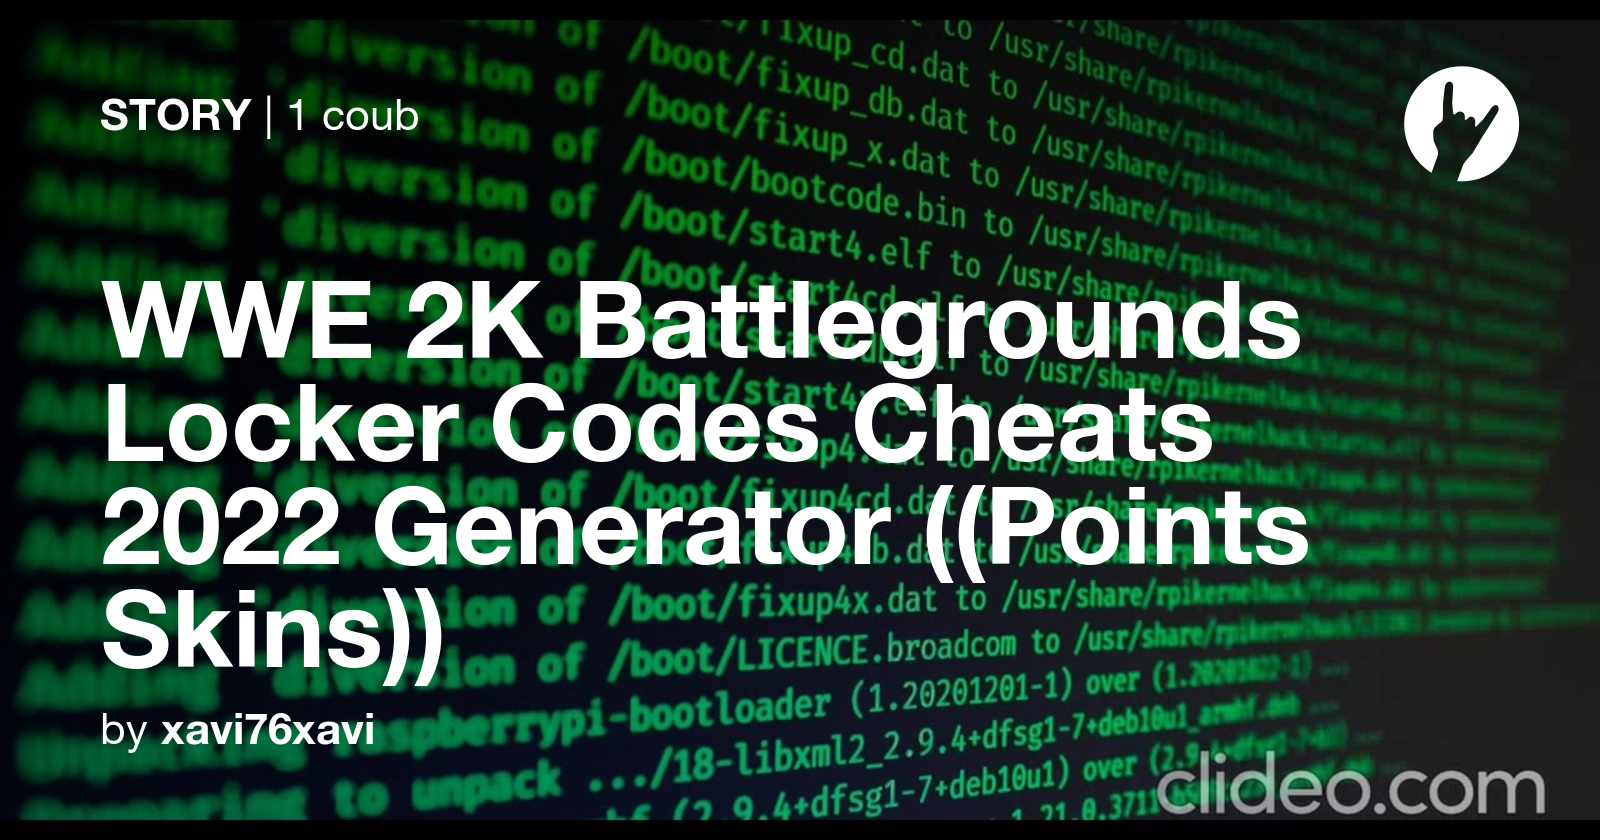 WWE 2K Battlegrounds Locker Codes Cheats 2022 Generator ((Points Skins